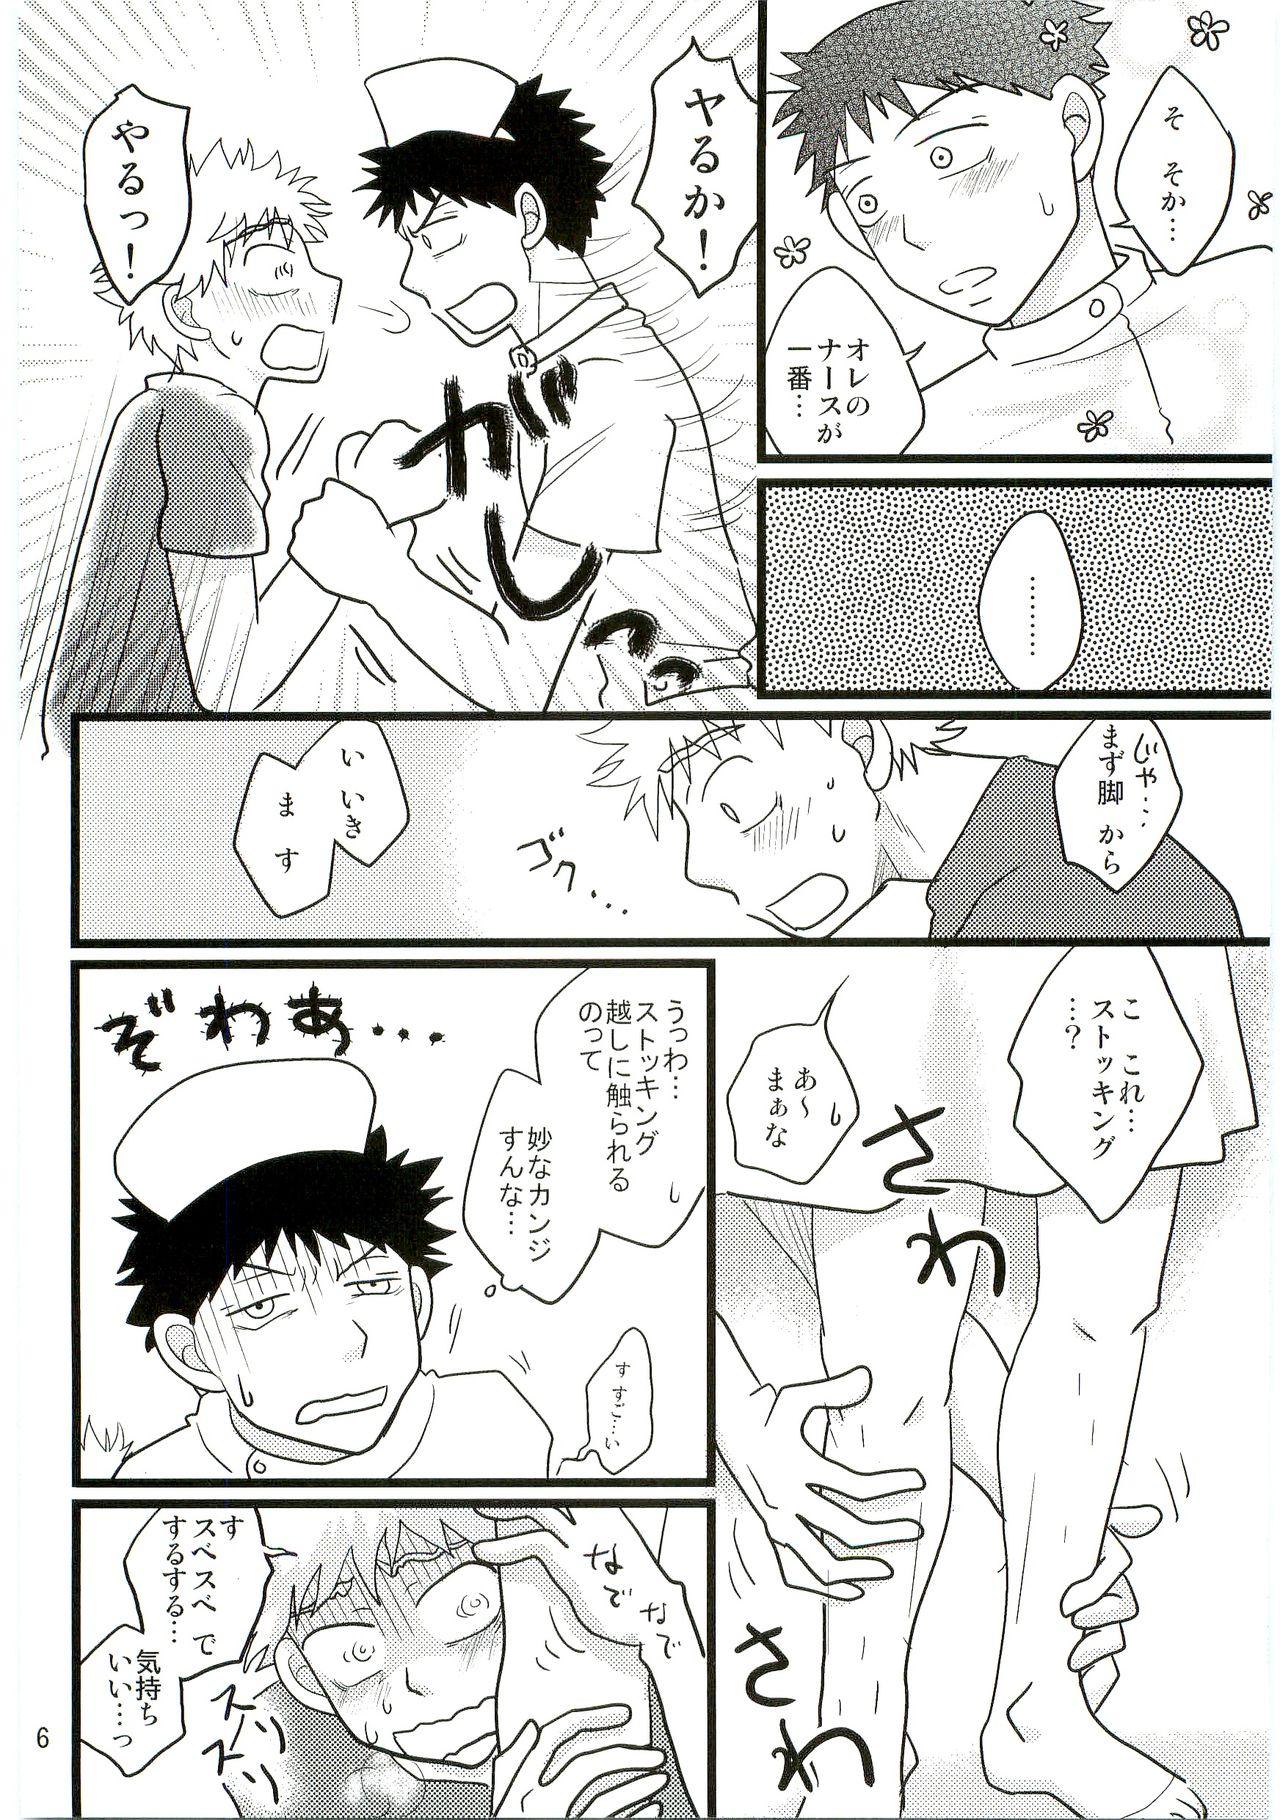 Piercing Kimi no Chuusha wa 1-man Barrel - Ookiku furikabutte Glam - Page 5